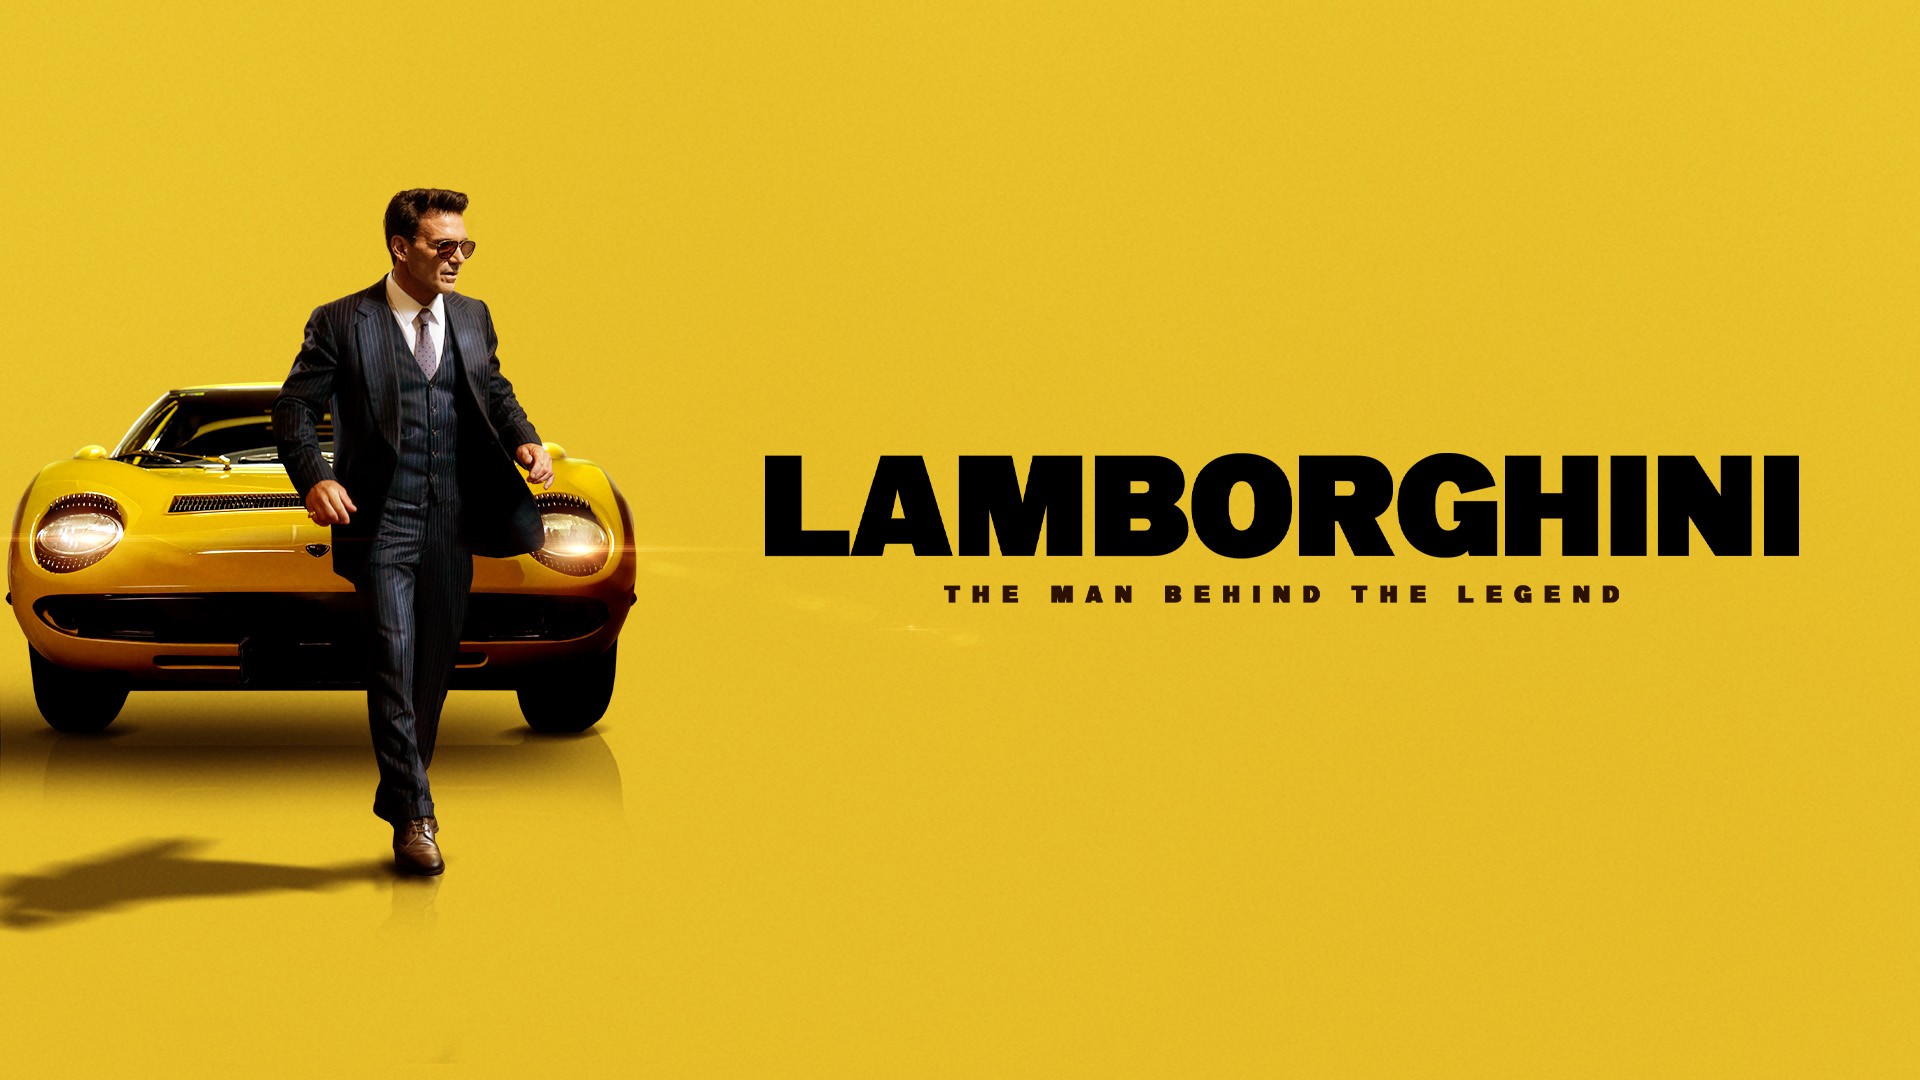 Dit is de trailer van film Lamborghini: The Man Behind The Legend